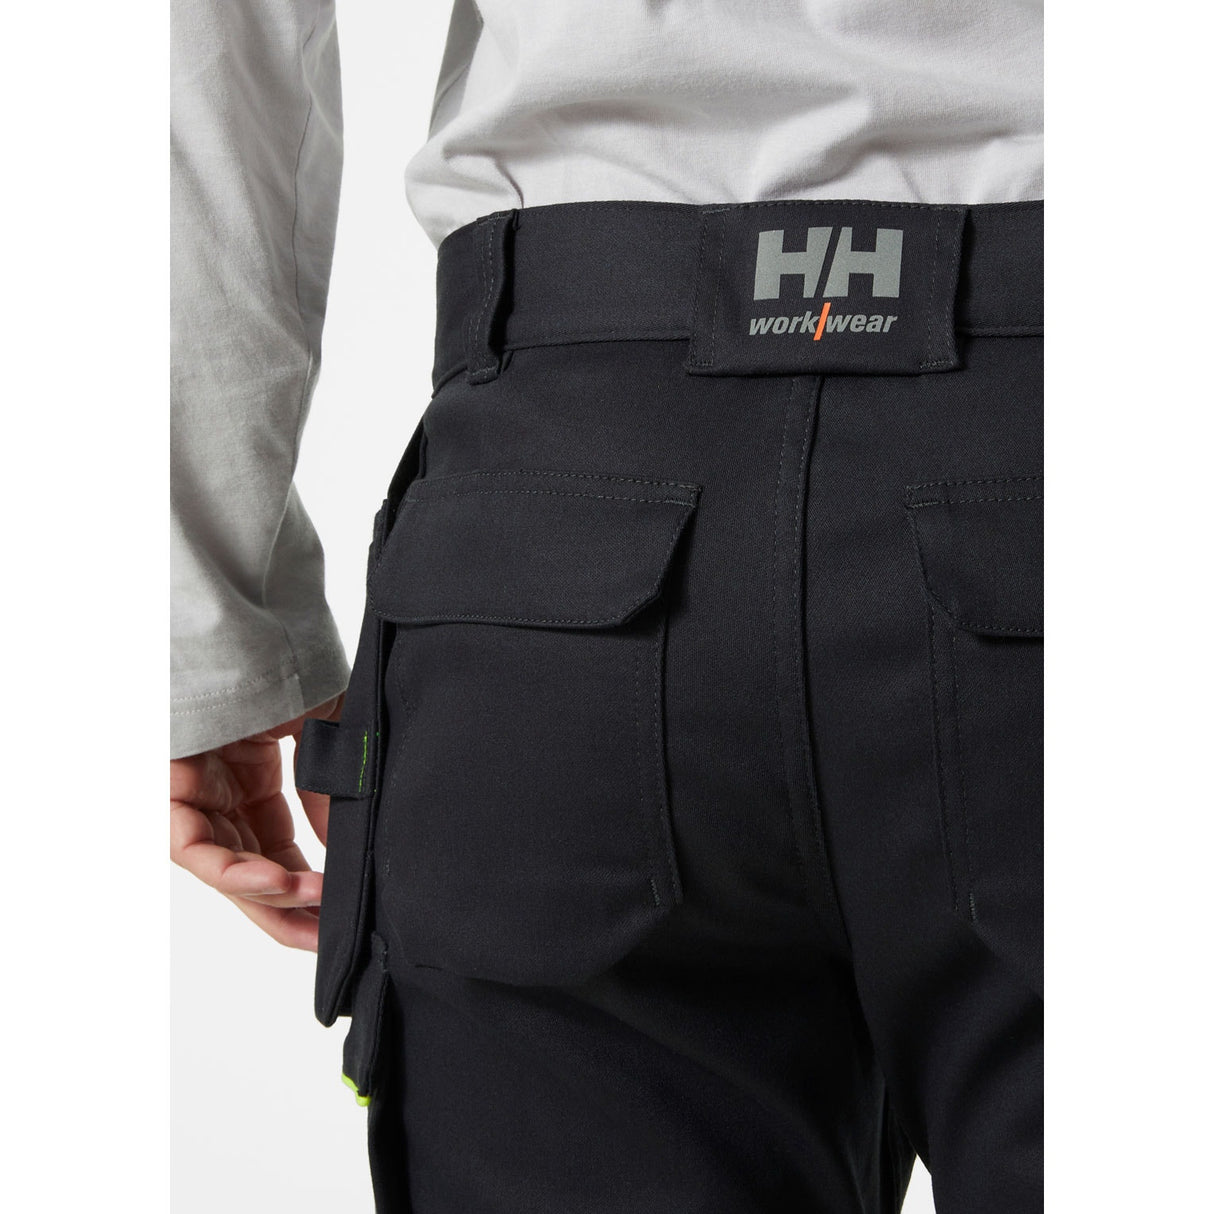 Helly Hansen Workwear Fyre Construction Pant Class 1